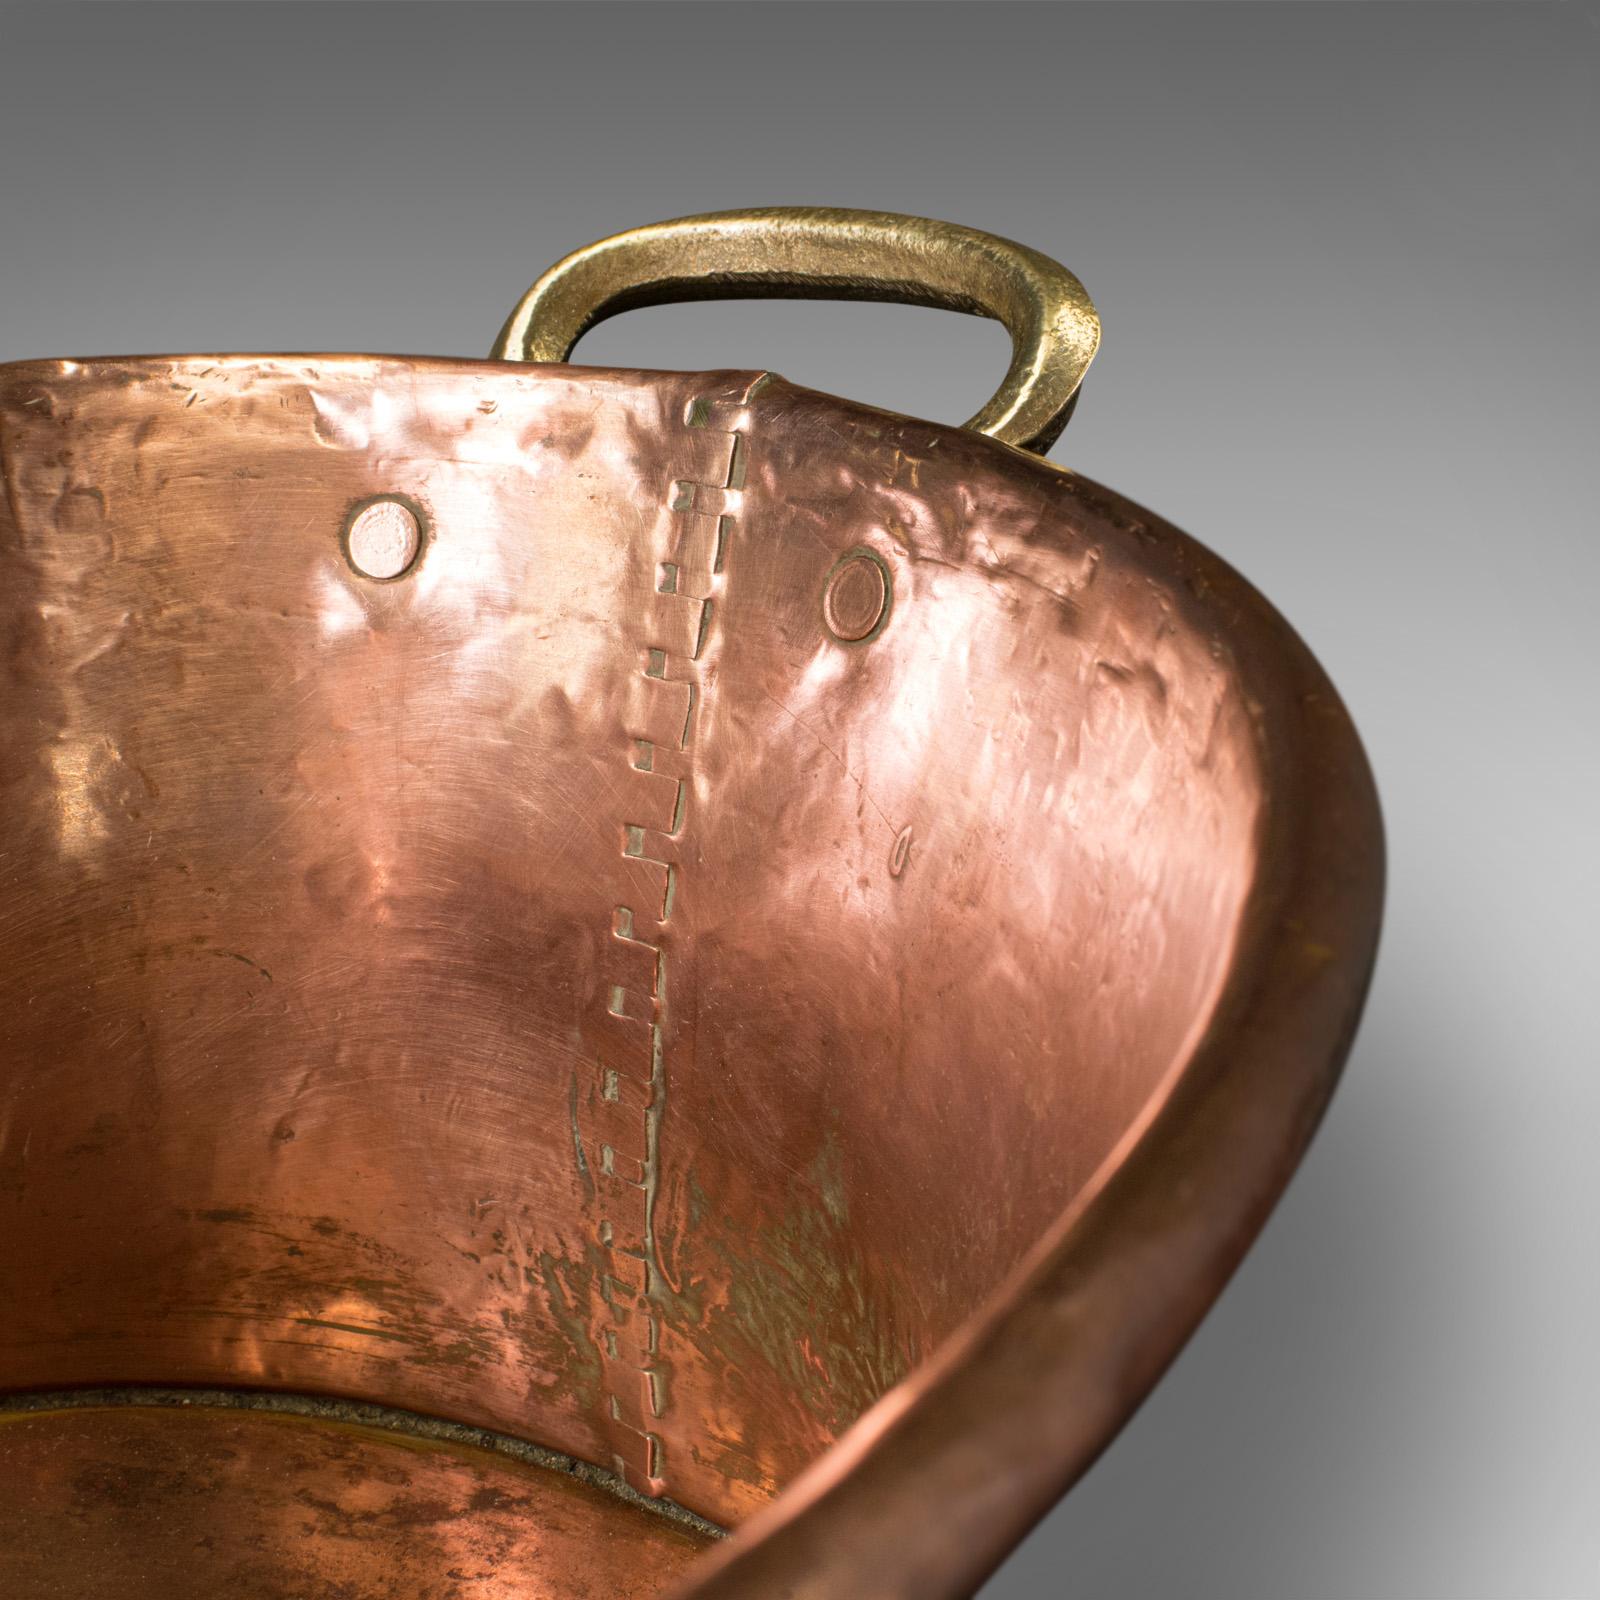 Antique Pheasant Roasting Pan, English, Hand Beaten Copper Pot, Decor, Georgian 3